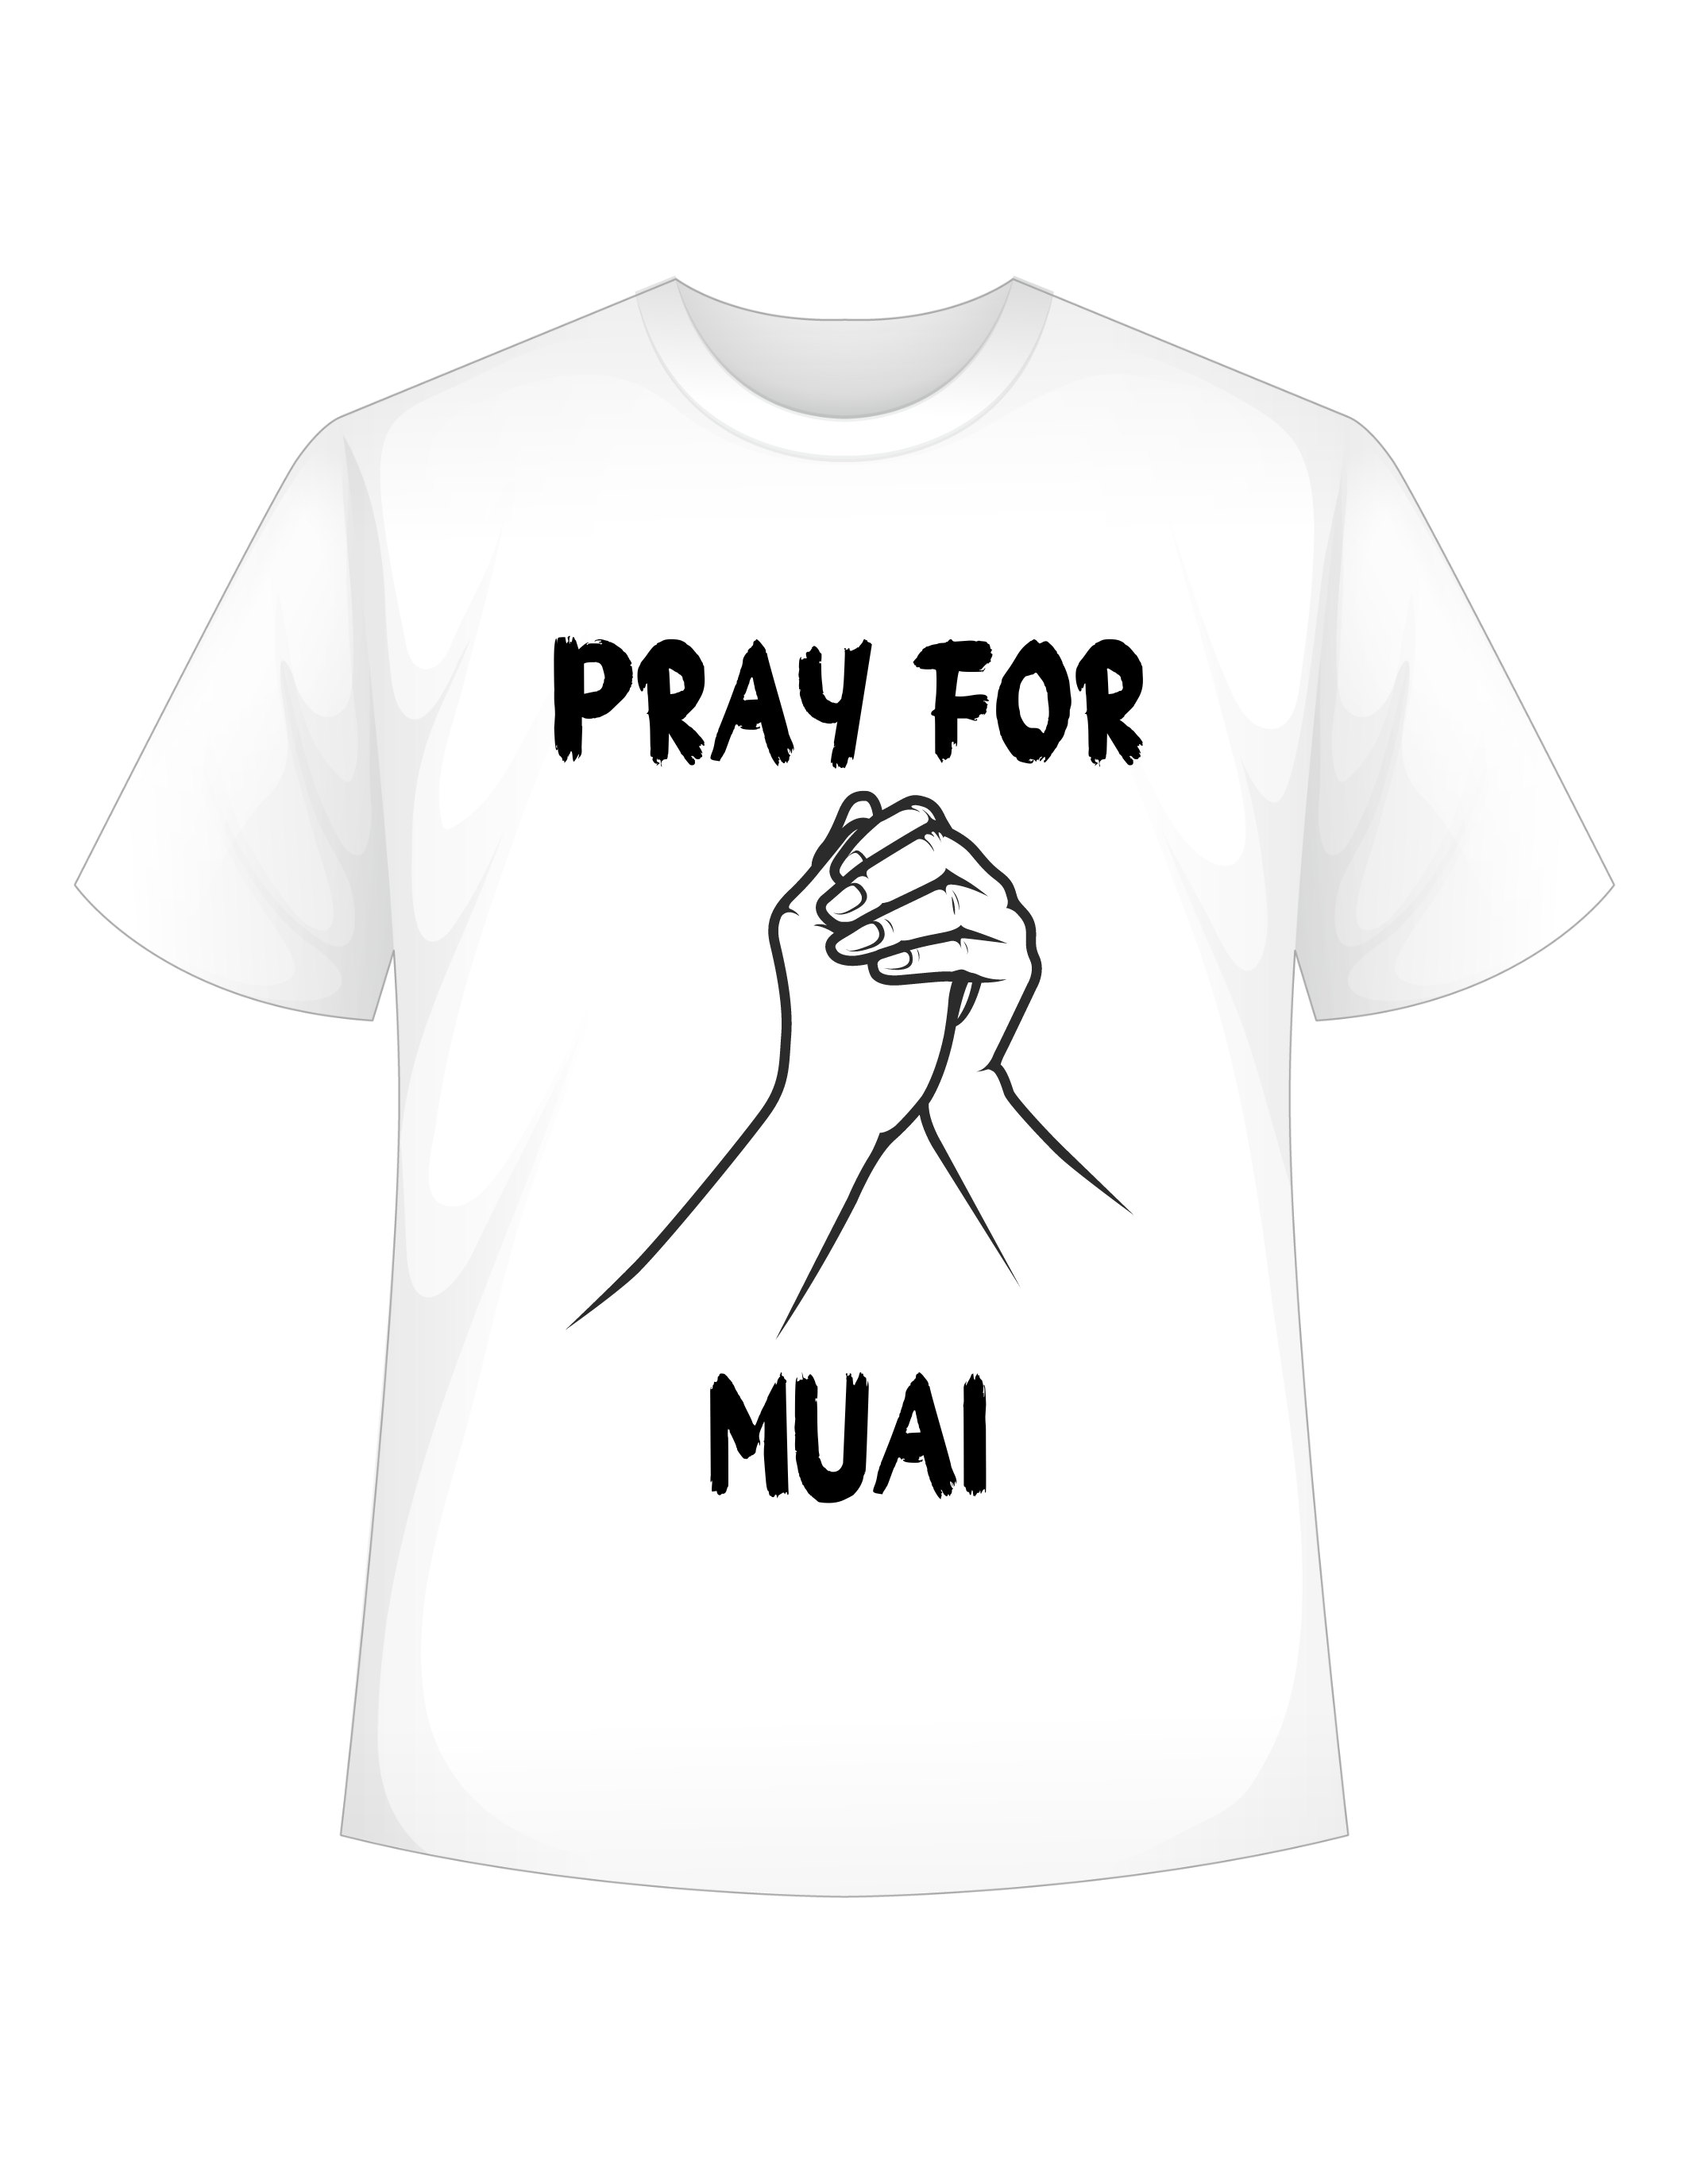 Support Muai, Wear Your Heart!